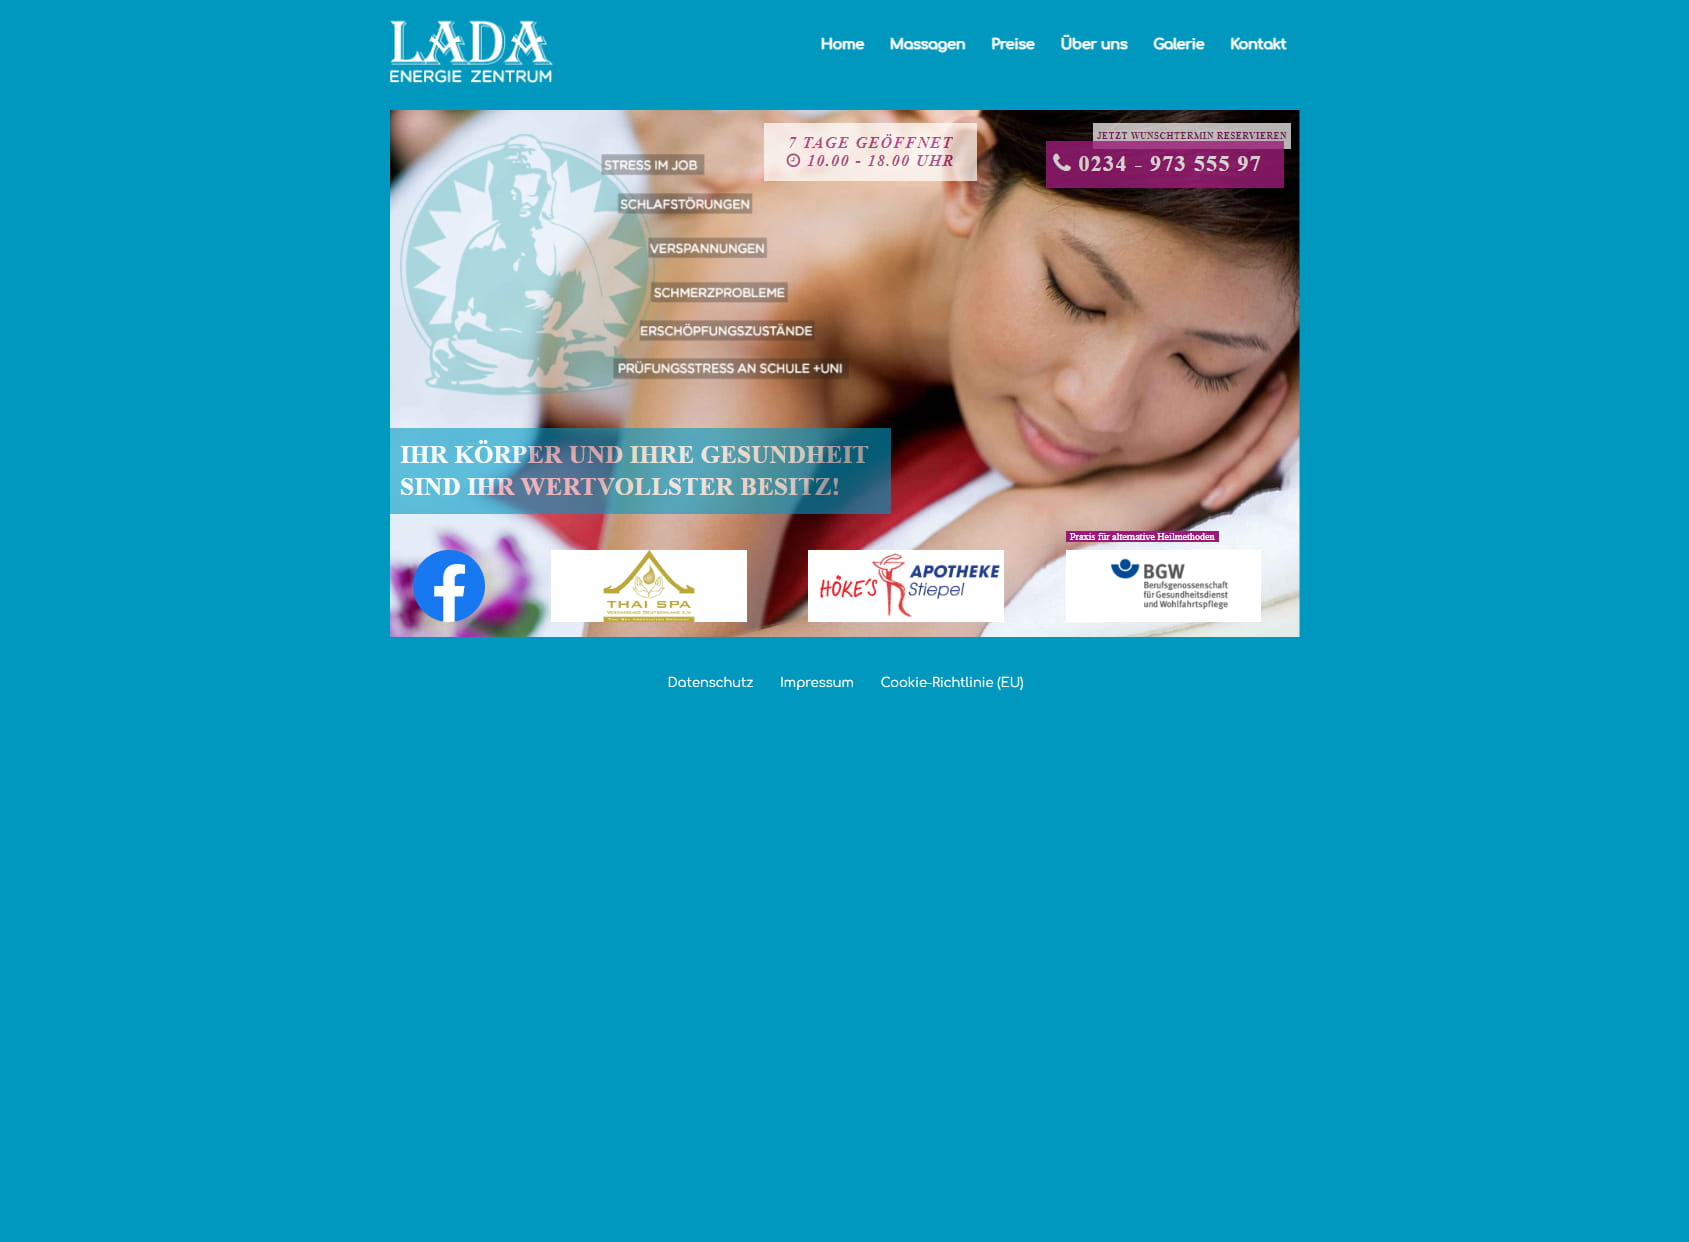 Thai Massage Bochum - LADA energy center